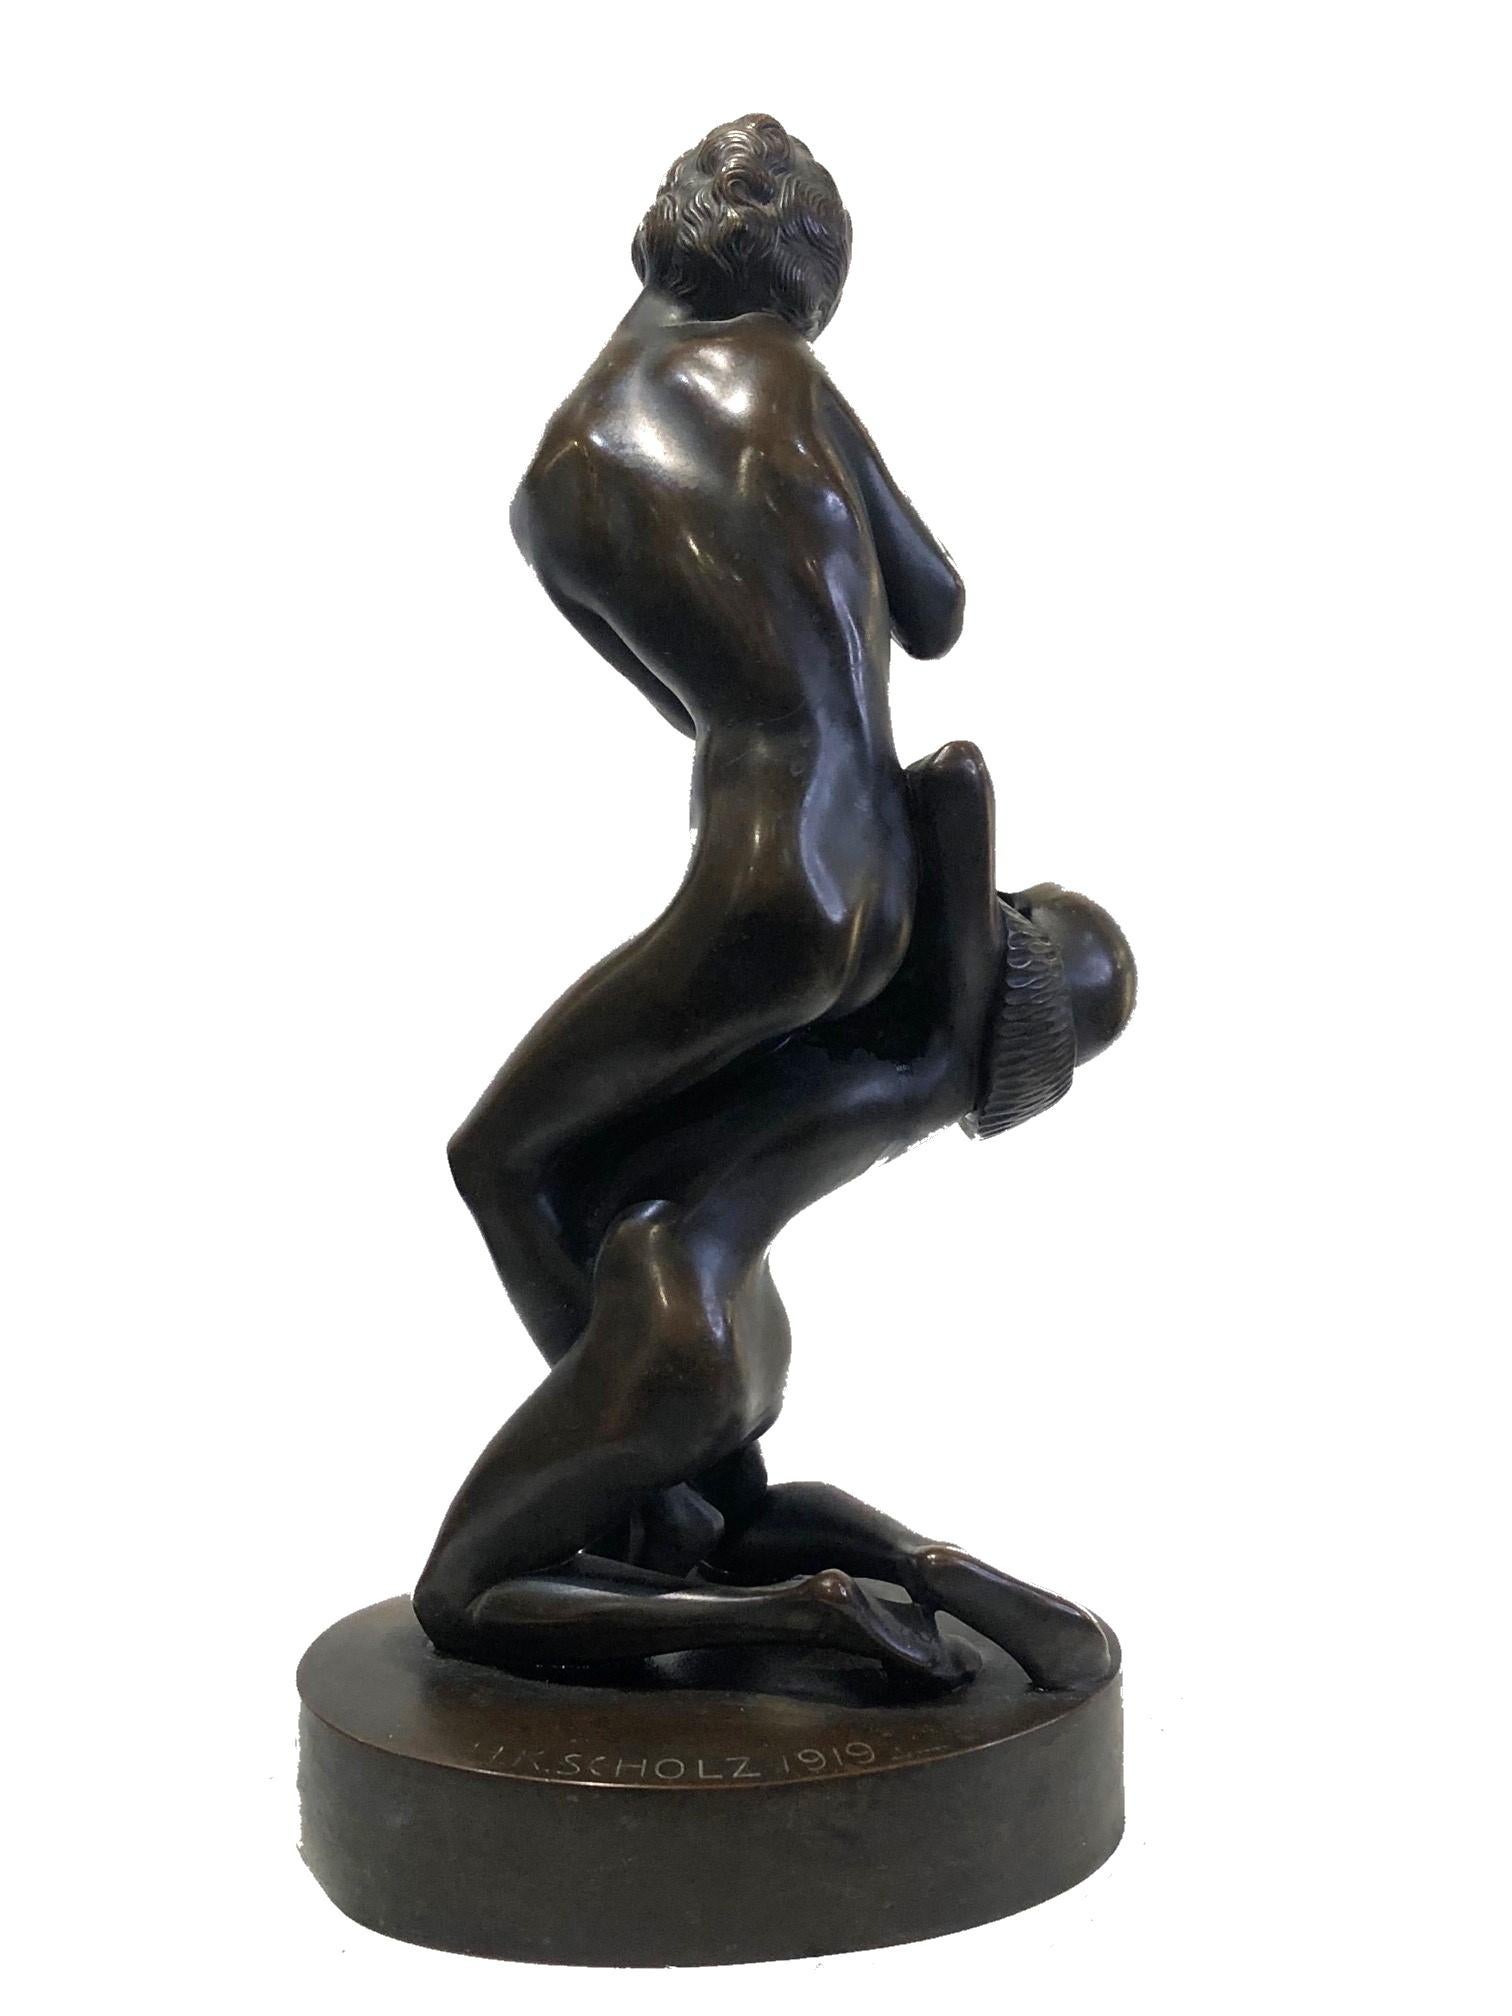 Heinrich Karl Scholz, Declaration of Love, Art Deco Bronze Sculpture, 1919 For Sale 4